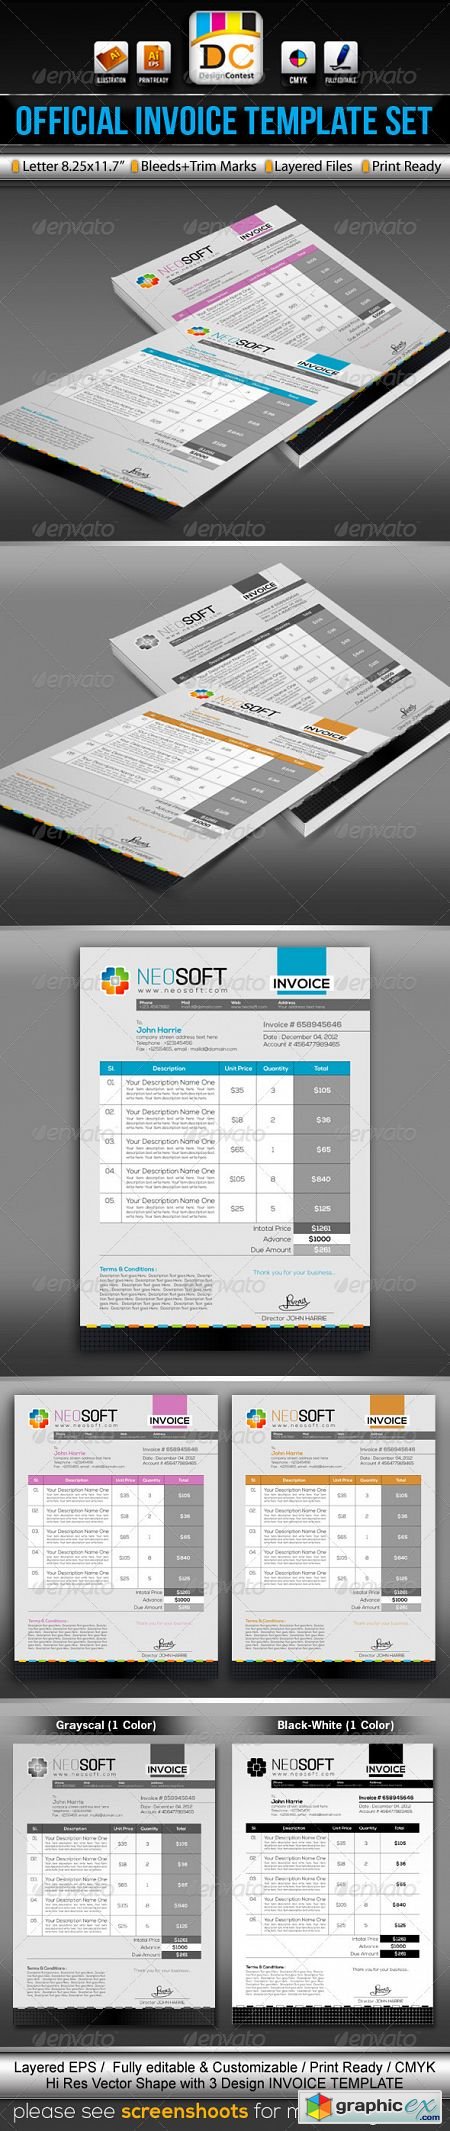 NeoSoft_Official Invoice/Cash Memo Template Set